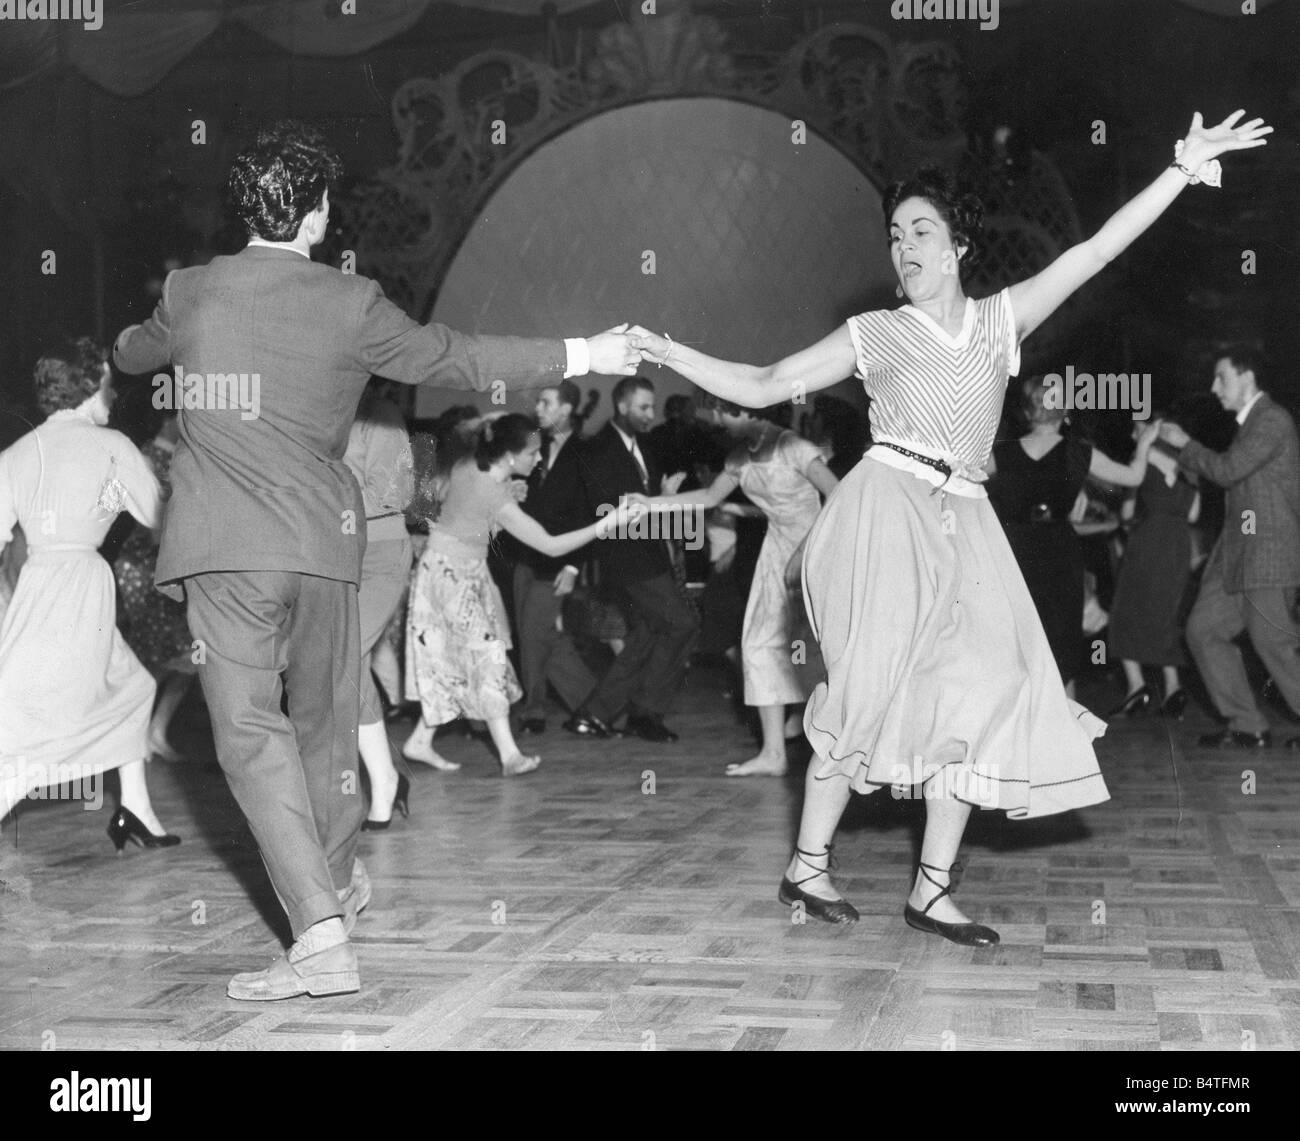 Rock n roll dancing 1950s -Fotos und -Bildmaterial in hoher Auflösung –  Alamy